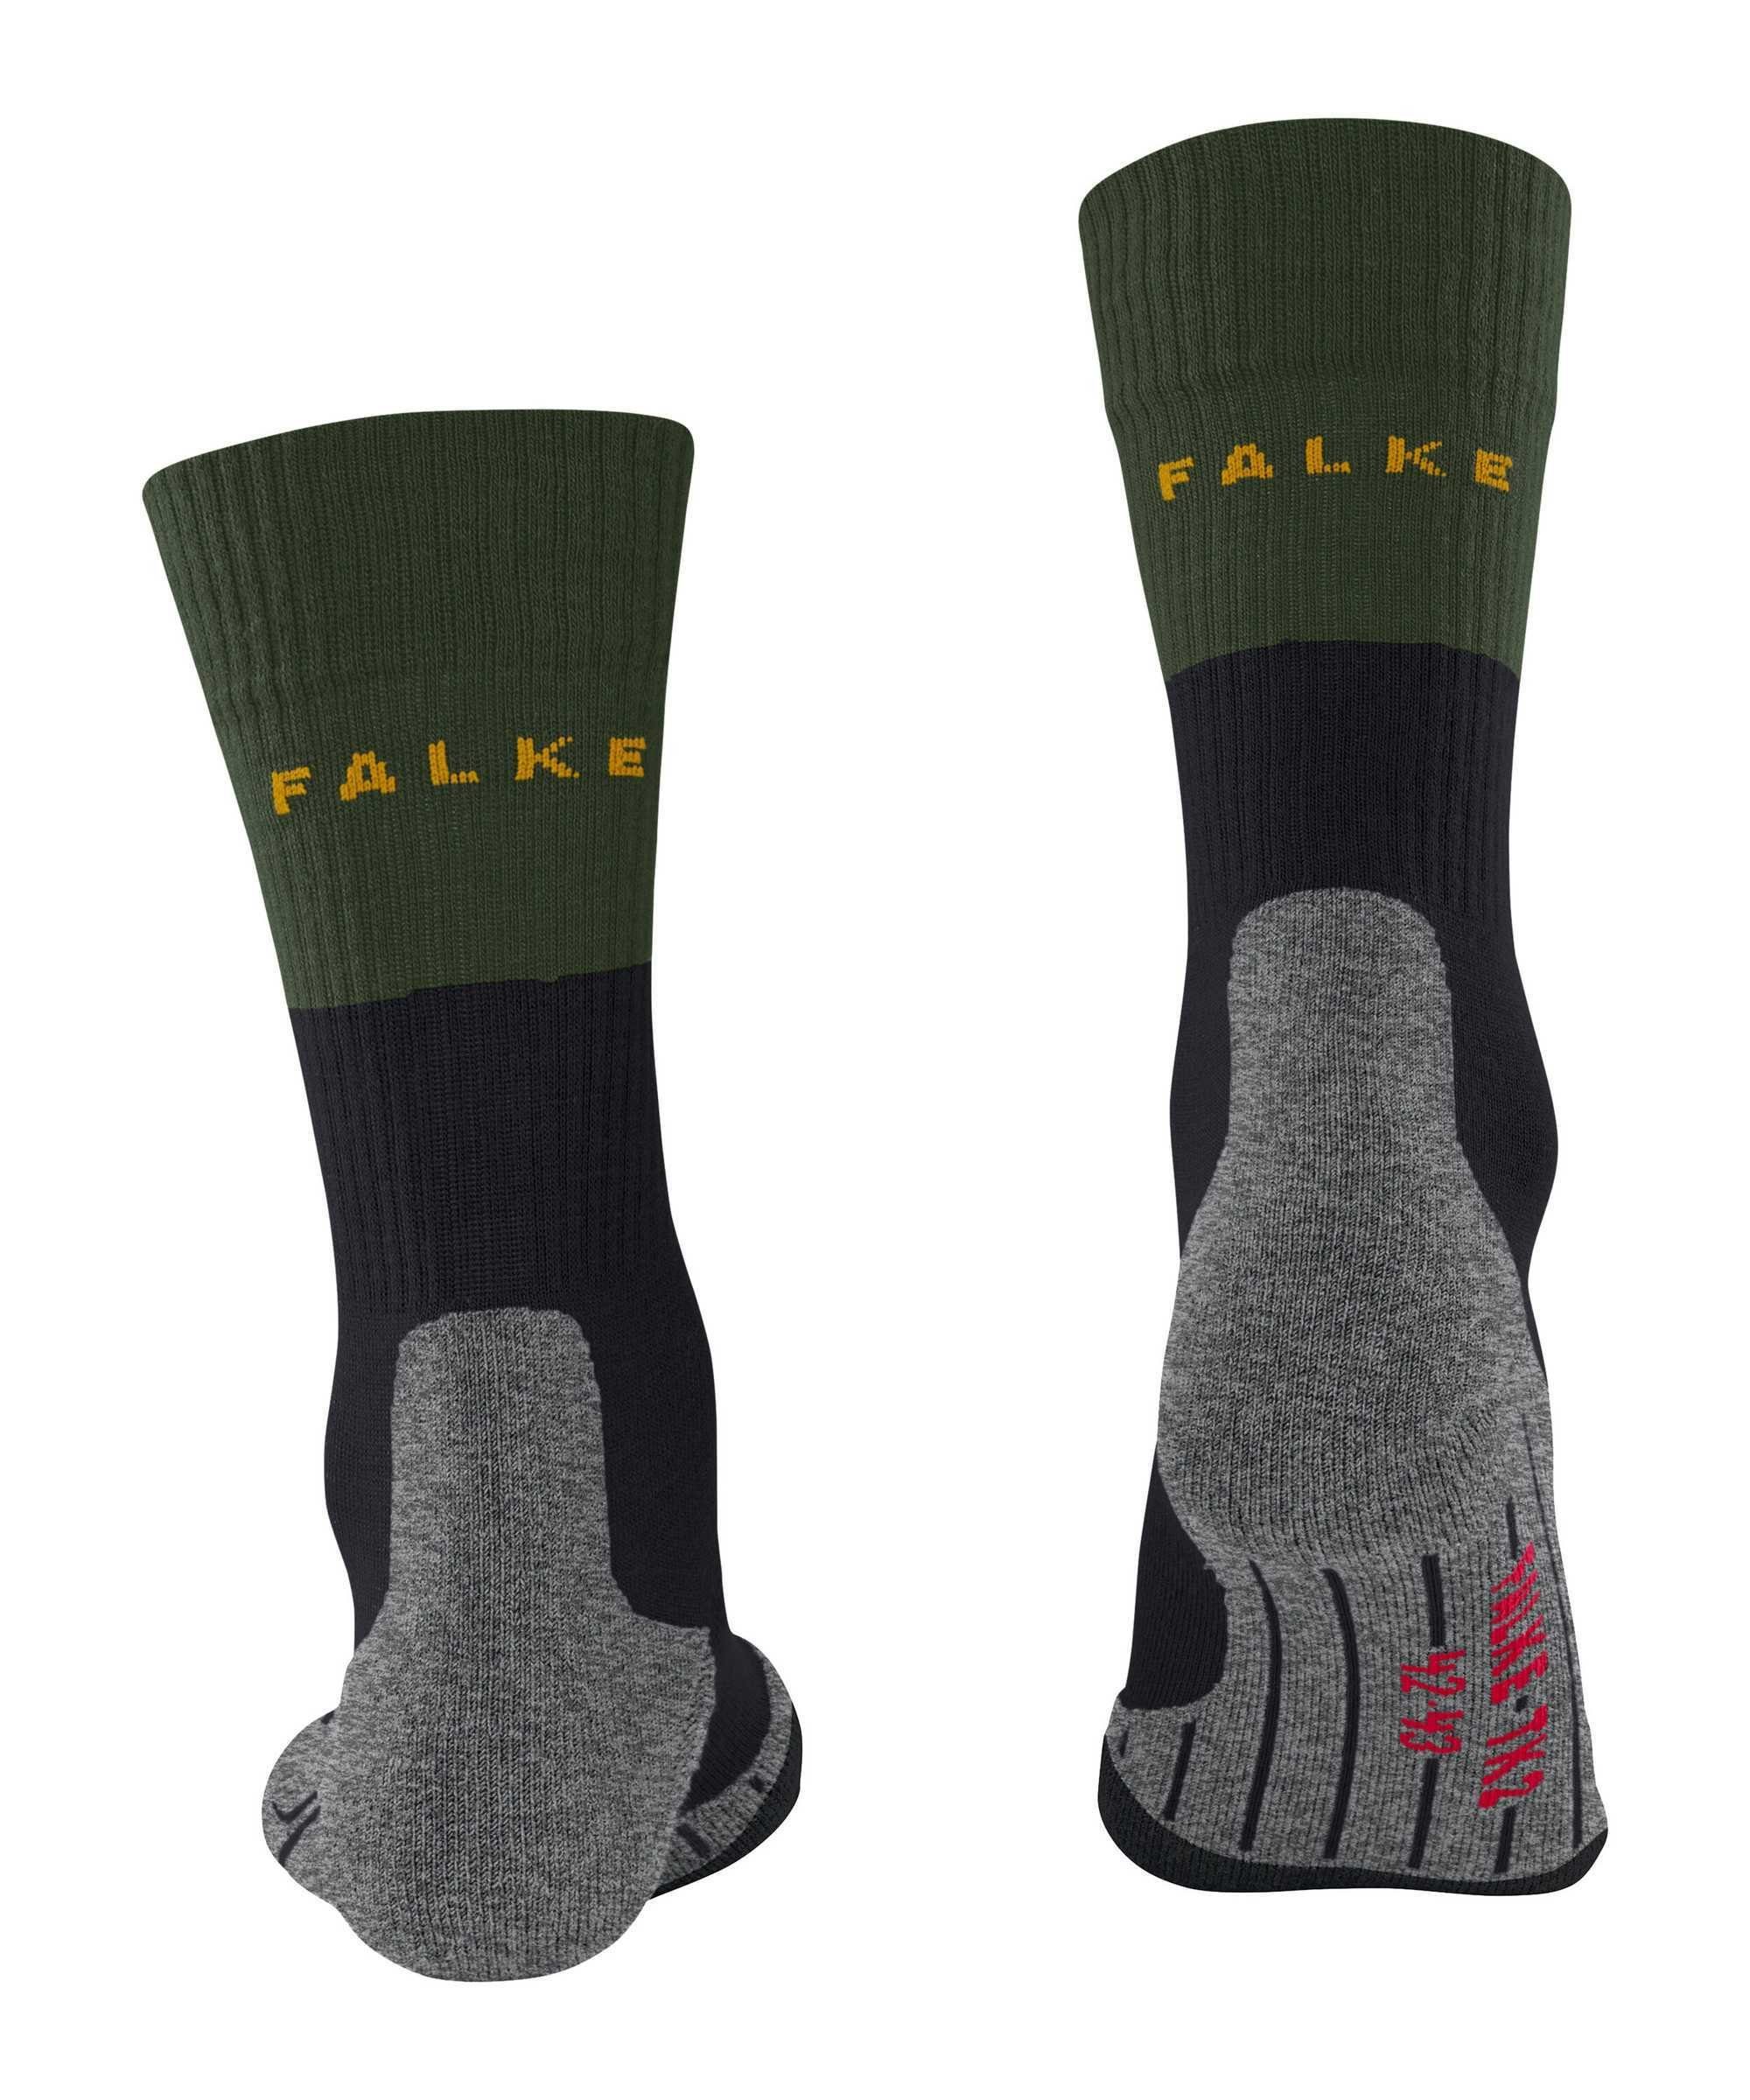 FALKE Sportsocken Socken (Vertigo) Herren TK2, Schwarz/Grau/Grün - Trekking Socken Polsterung